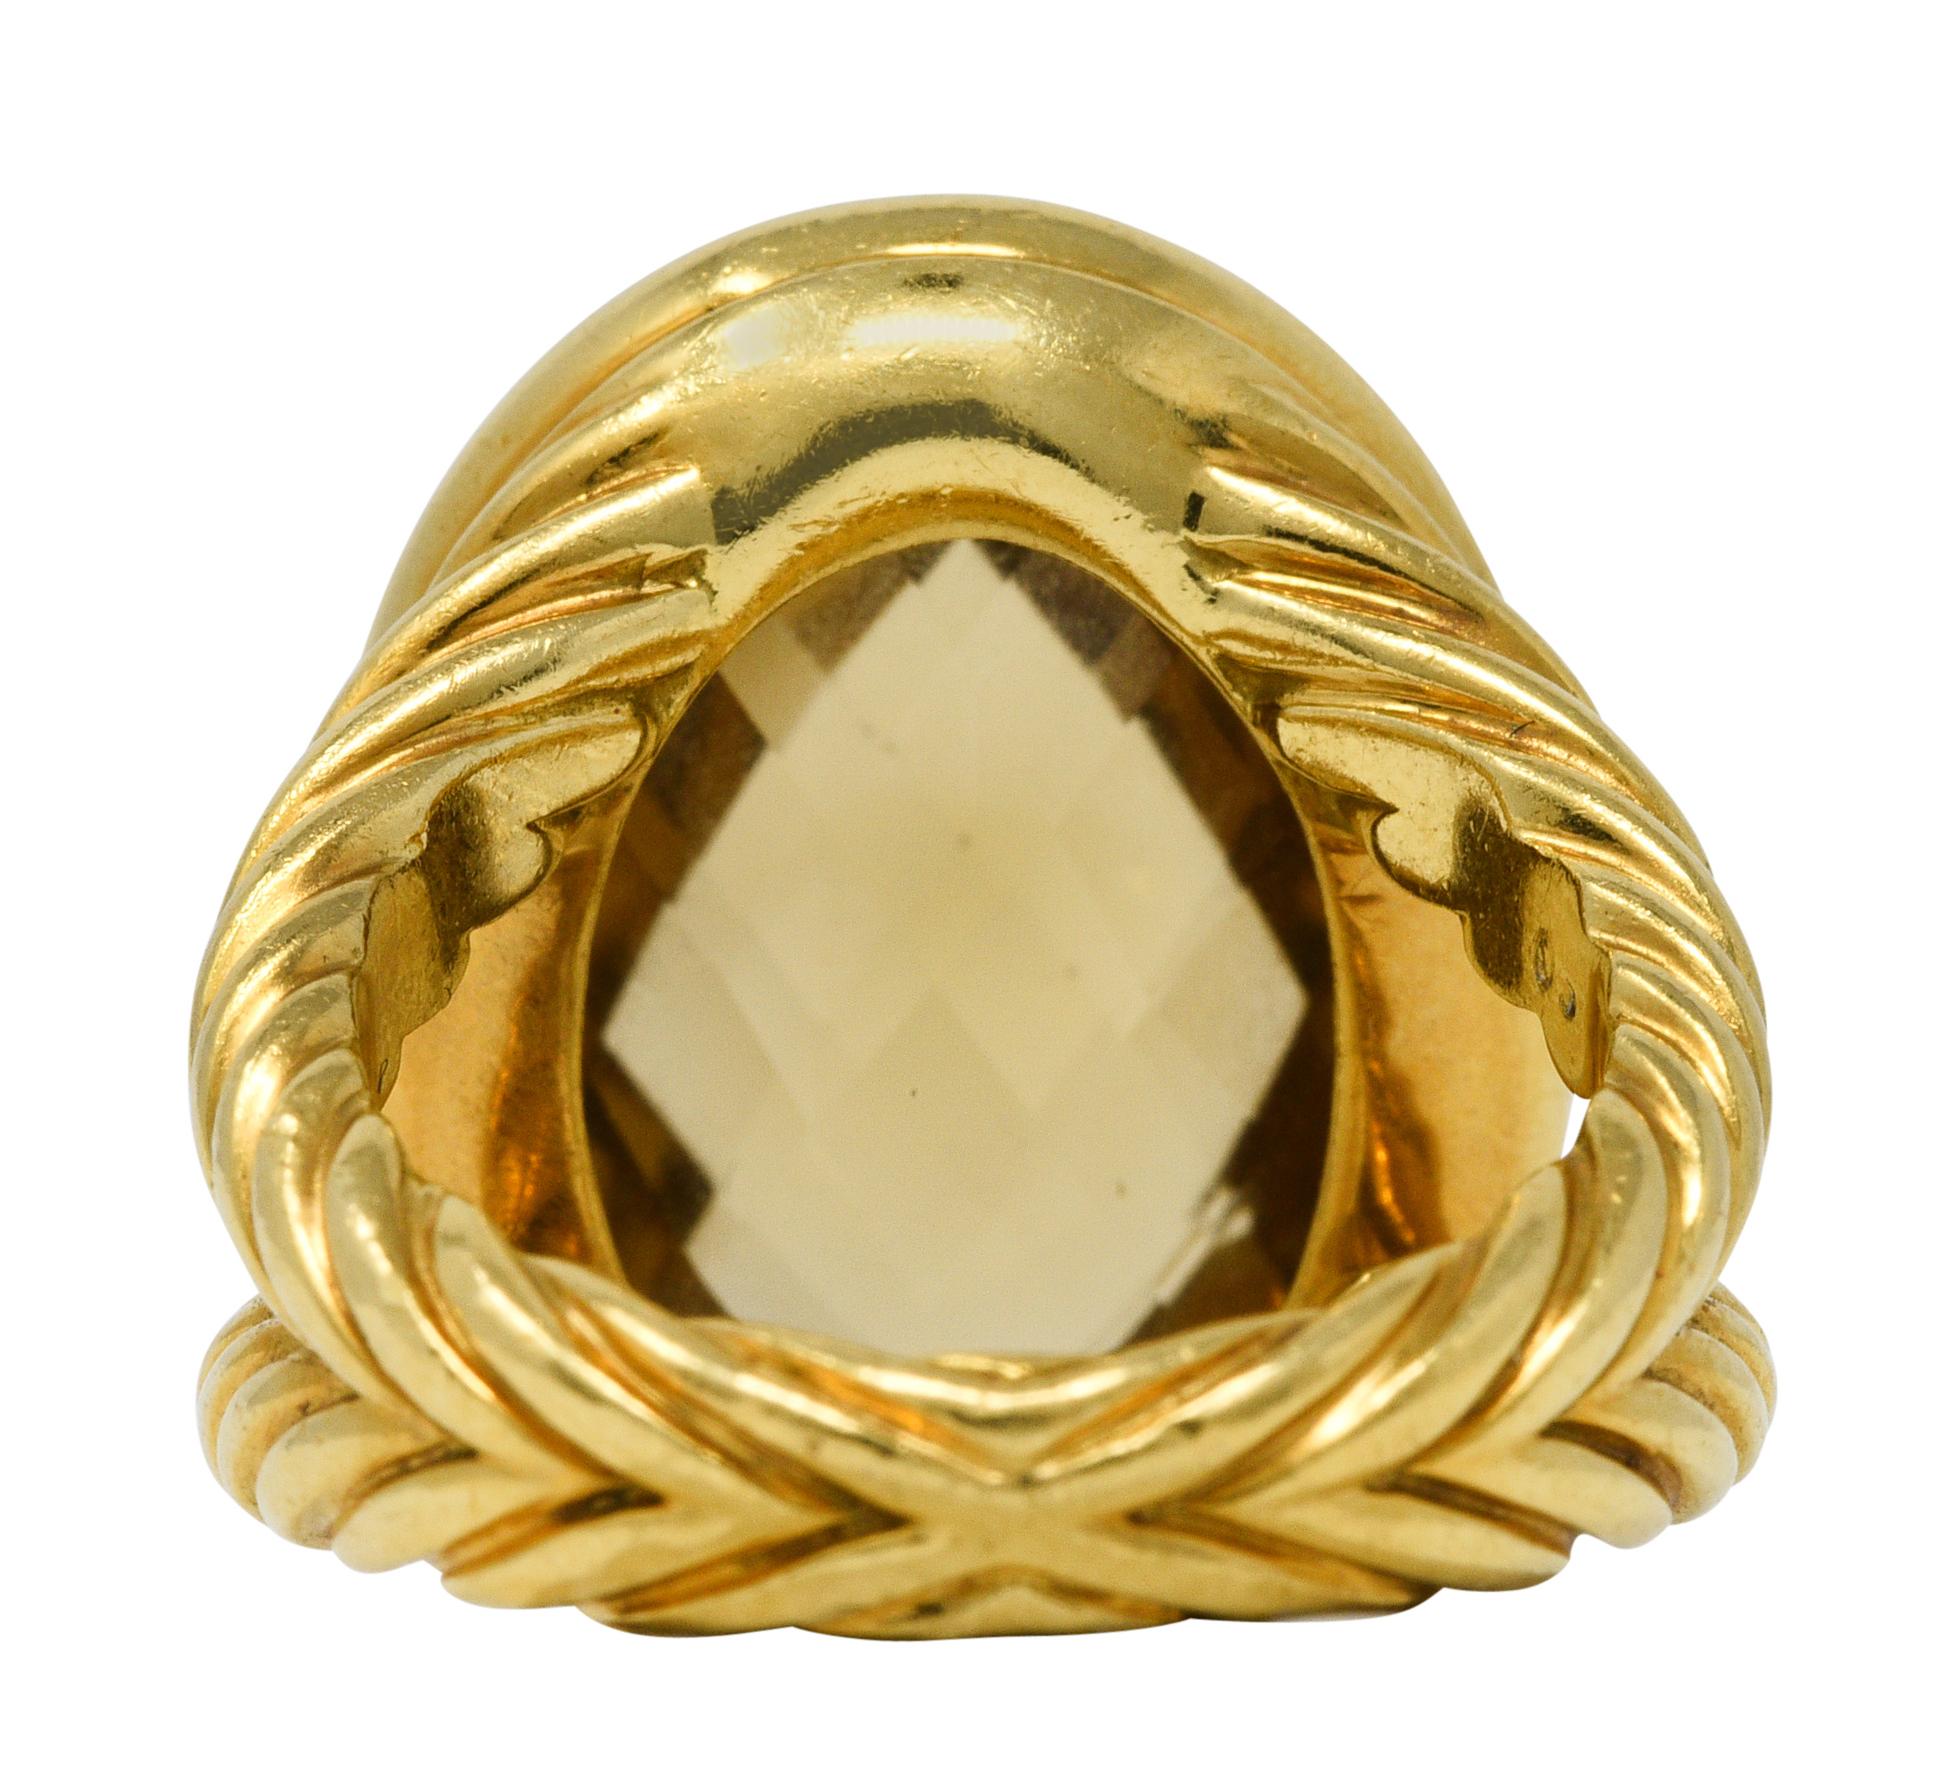 18k gold gemstone rings